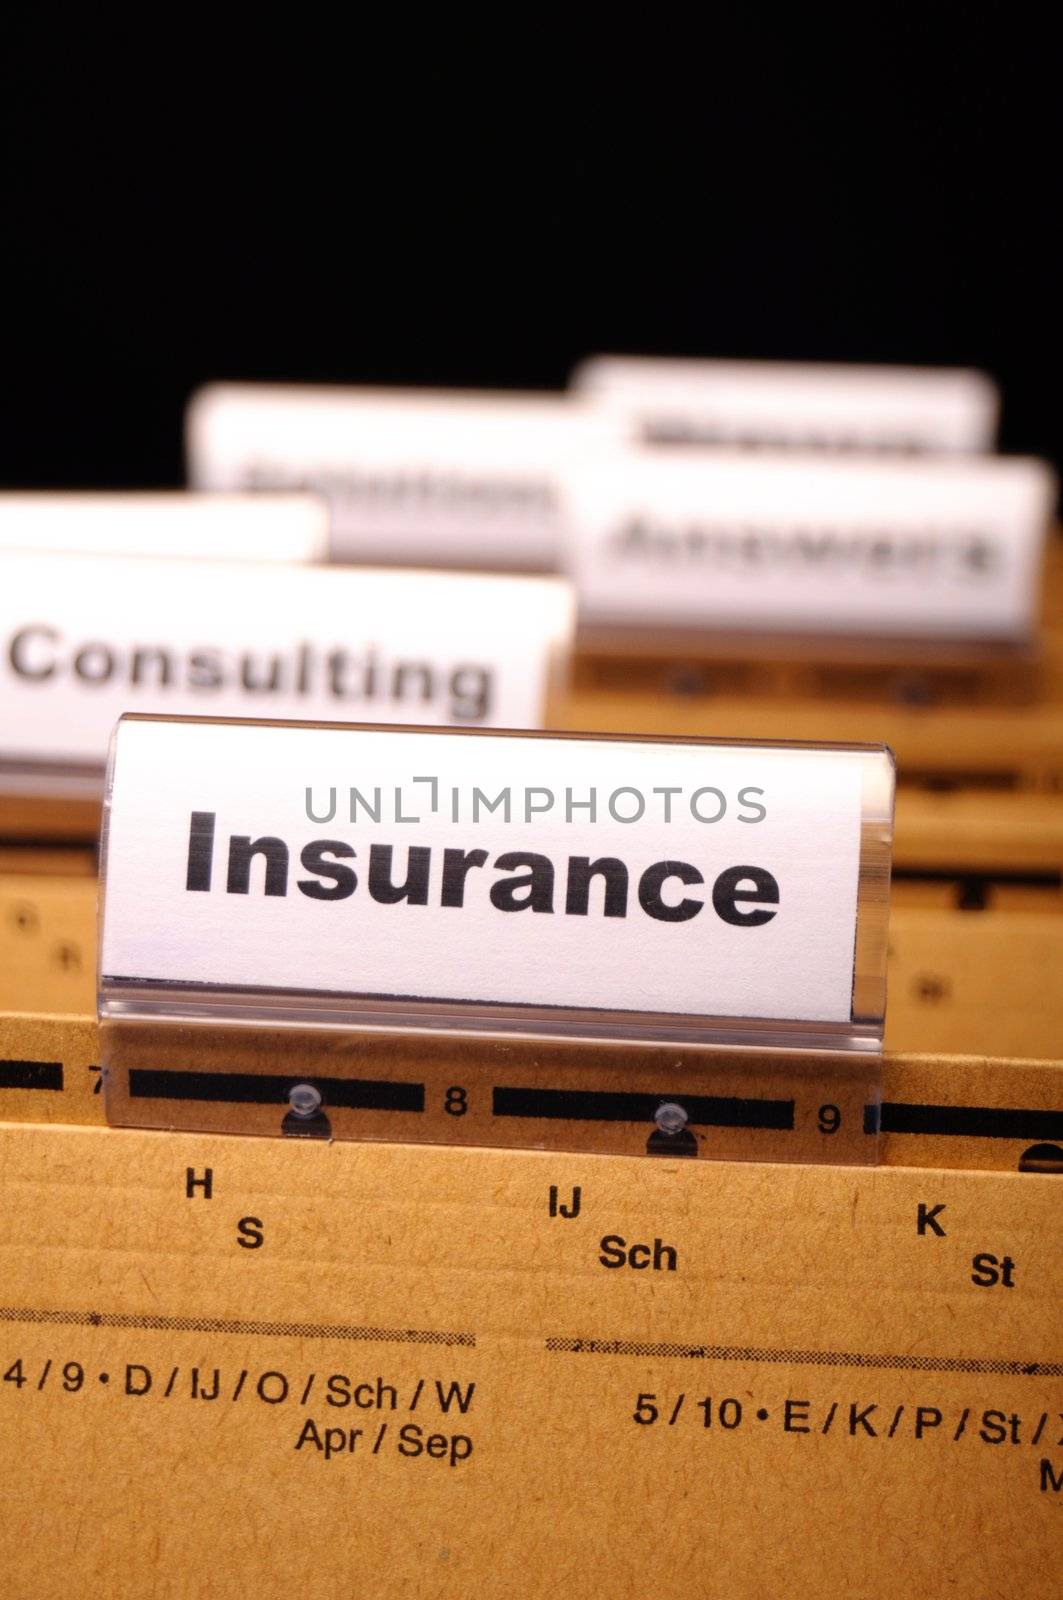 insurance word on business folder showing risk management concept